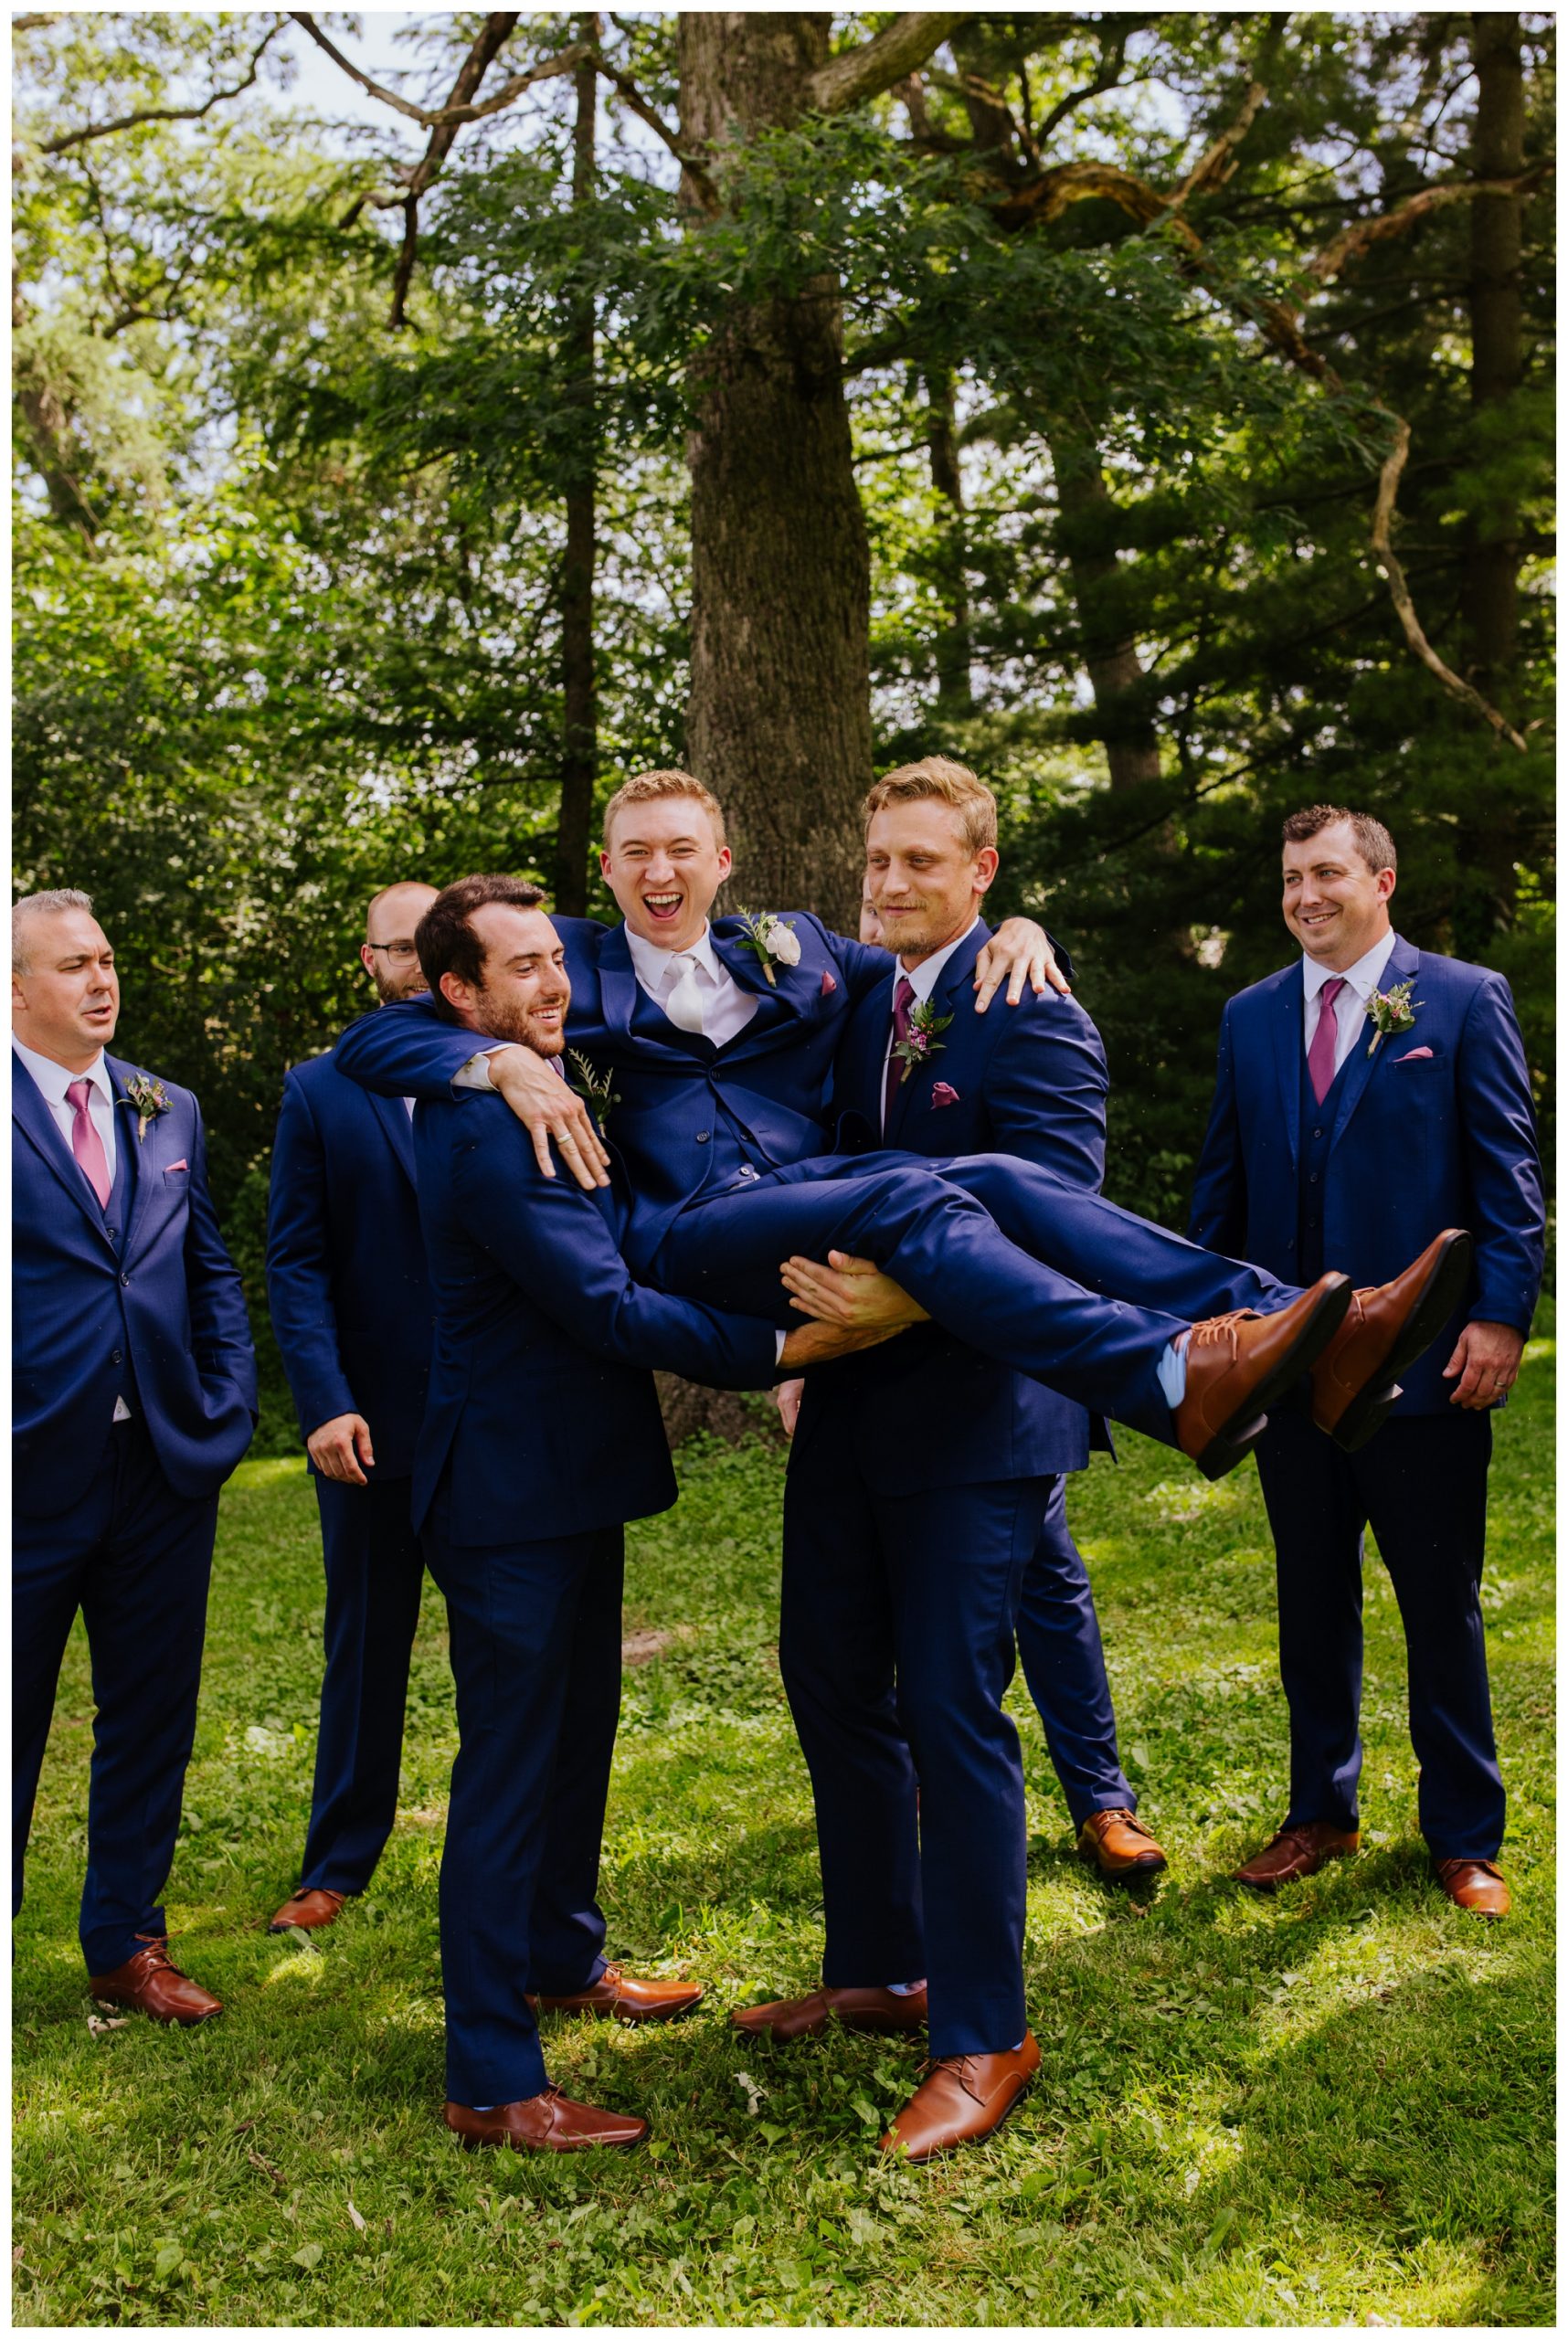 fun groomsmen poses